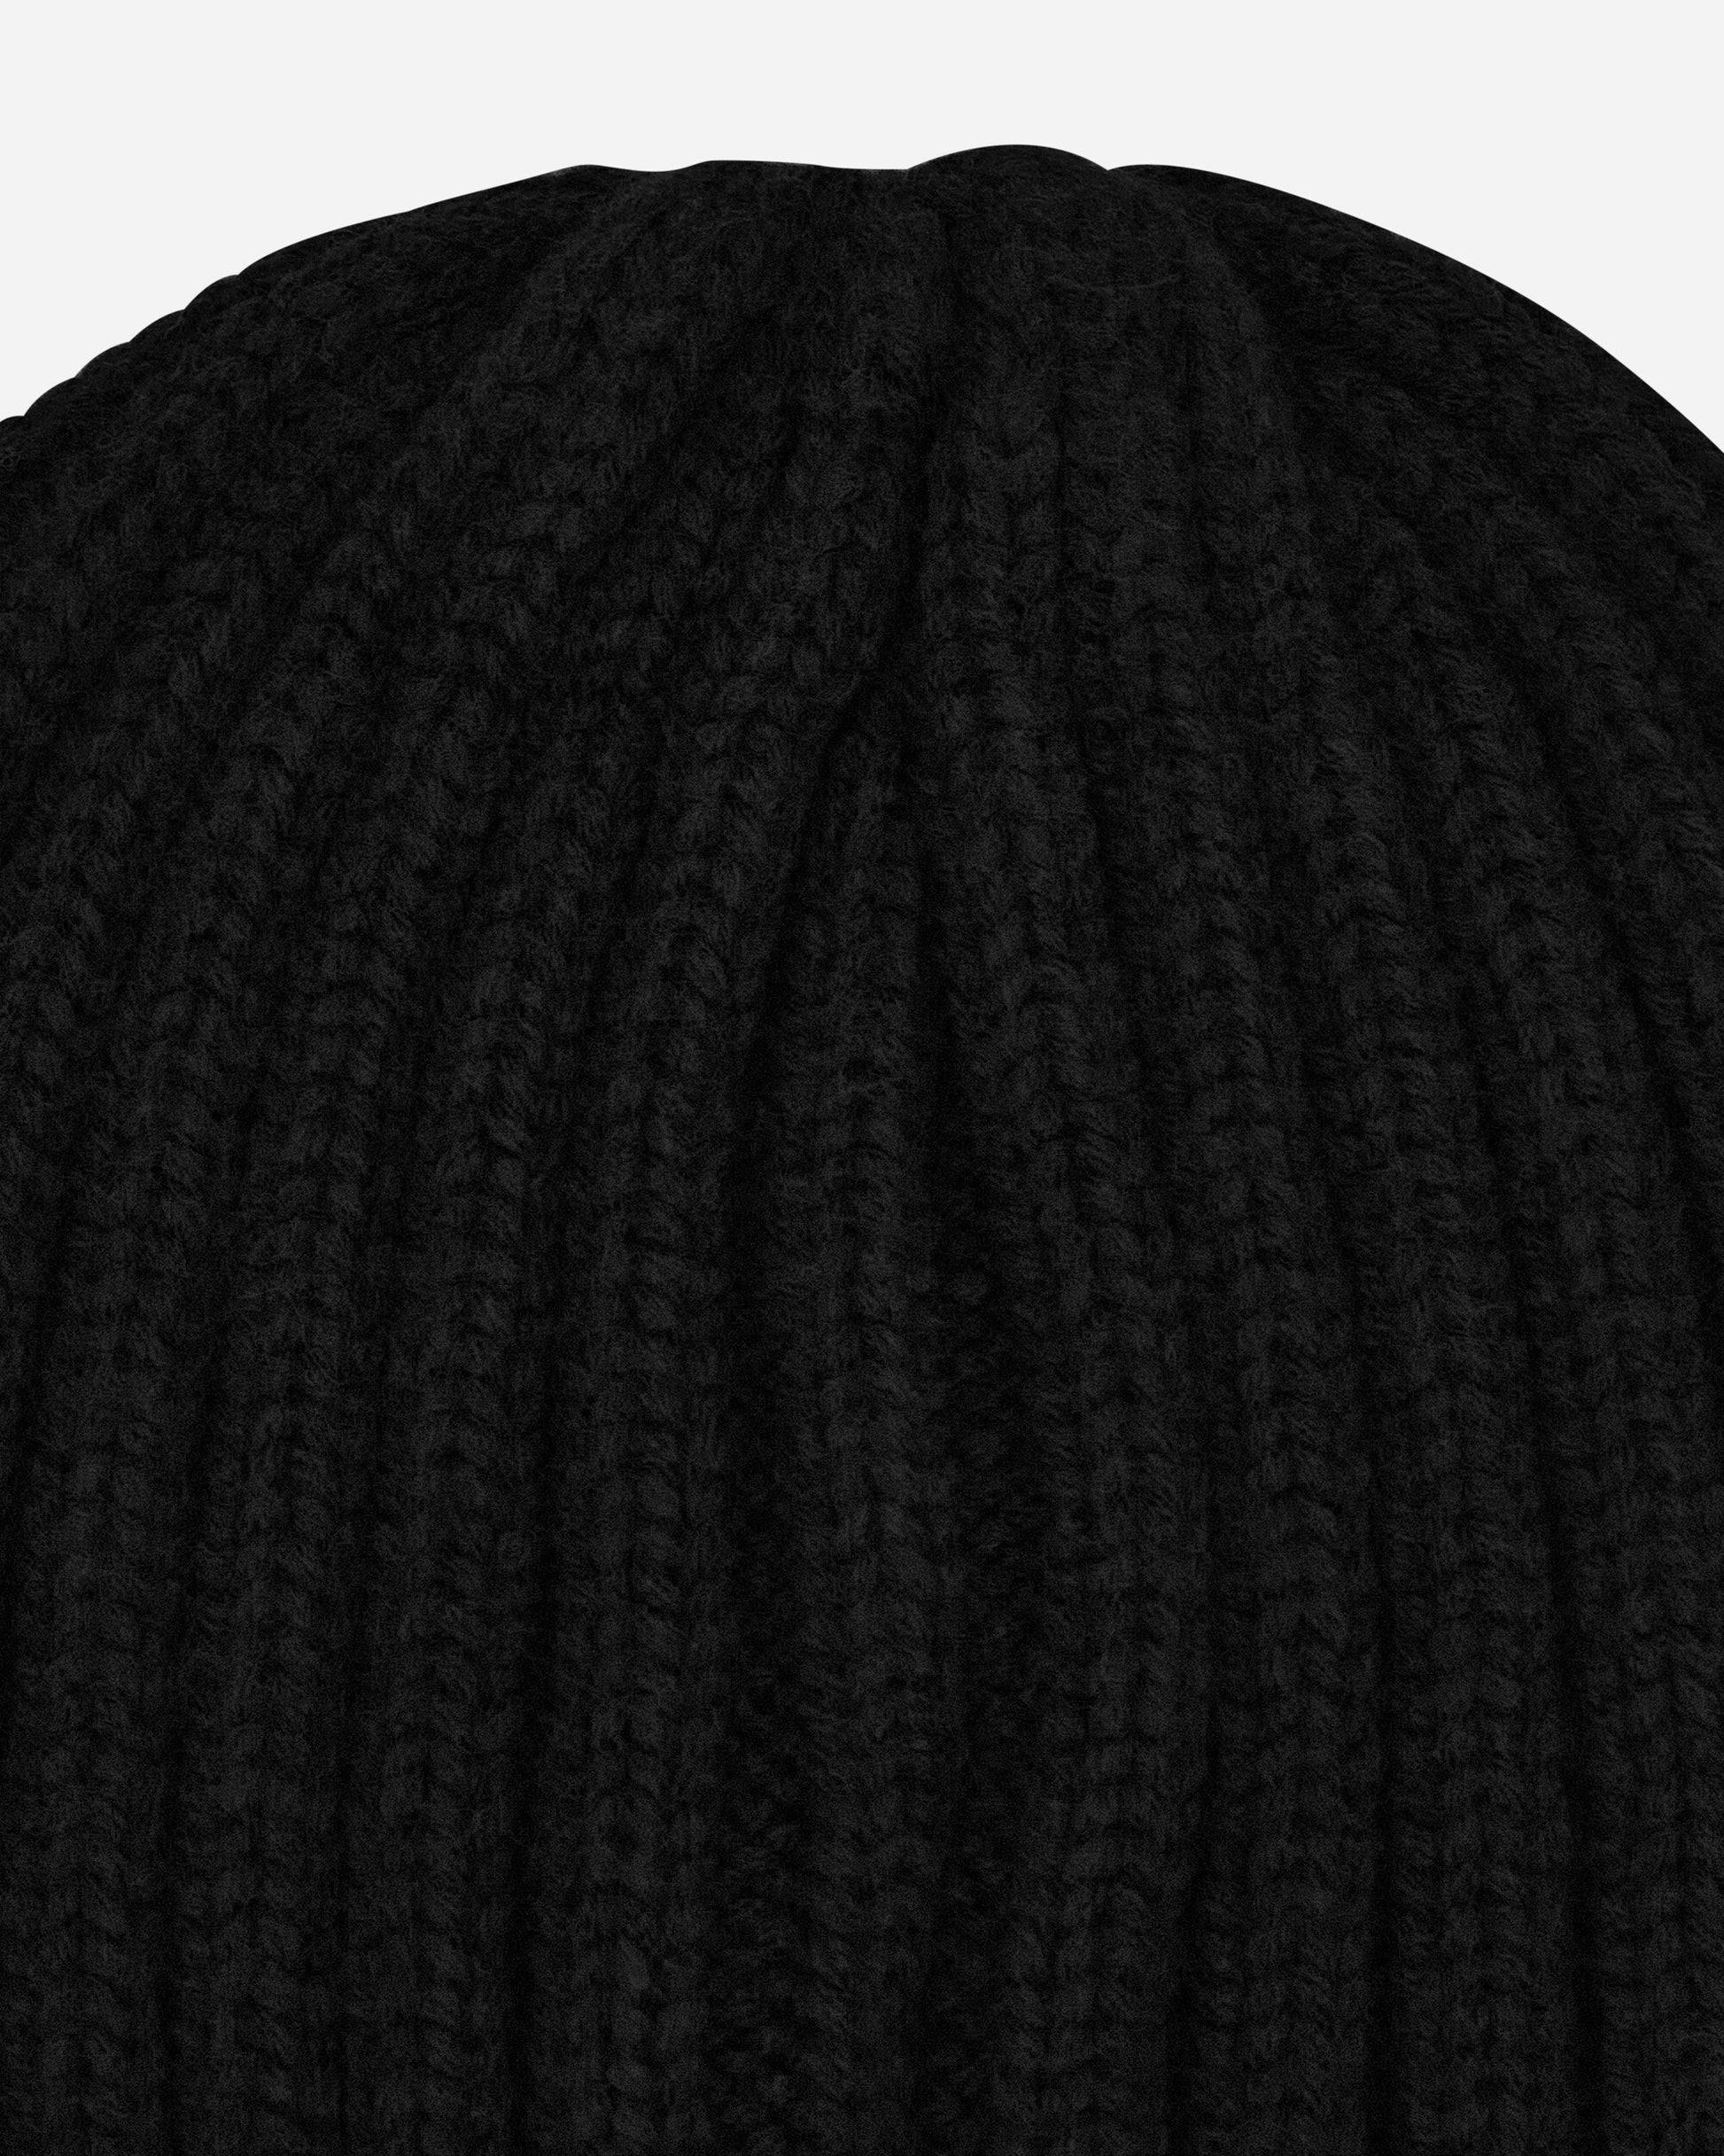 Wild Things W Logo Beanie Black Hats Beanies WT232-36 BLACK